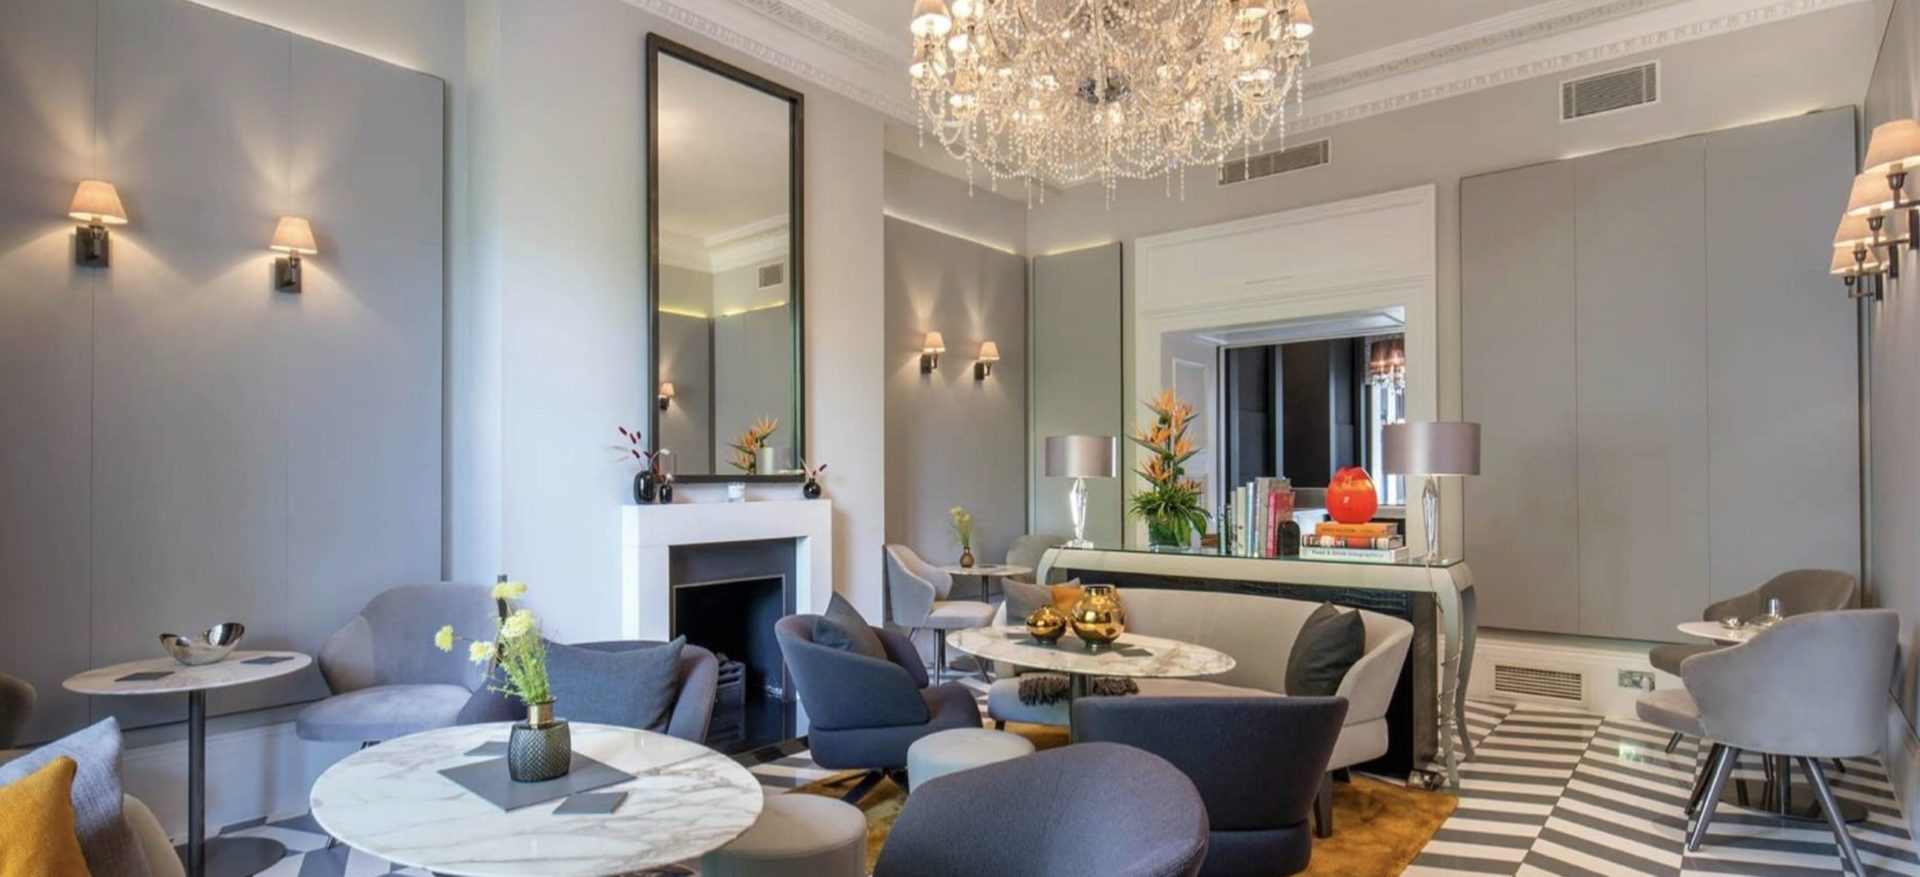 Luxuria Lifestyle reviews Eccleston Square Hotel - a luxury boutique hotel on the edge of Belgravia